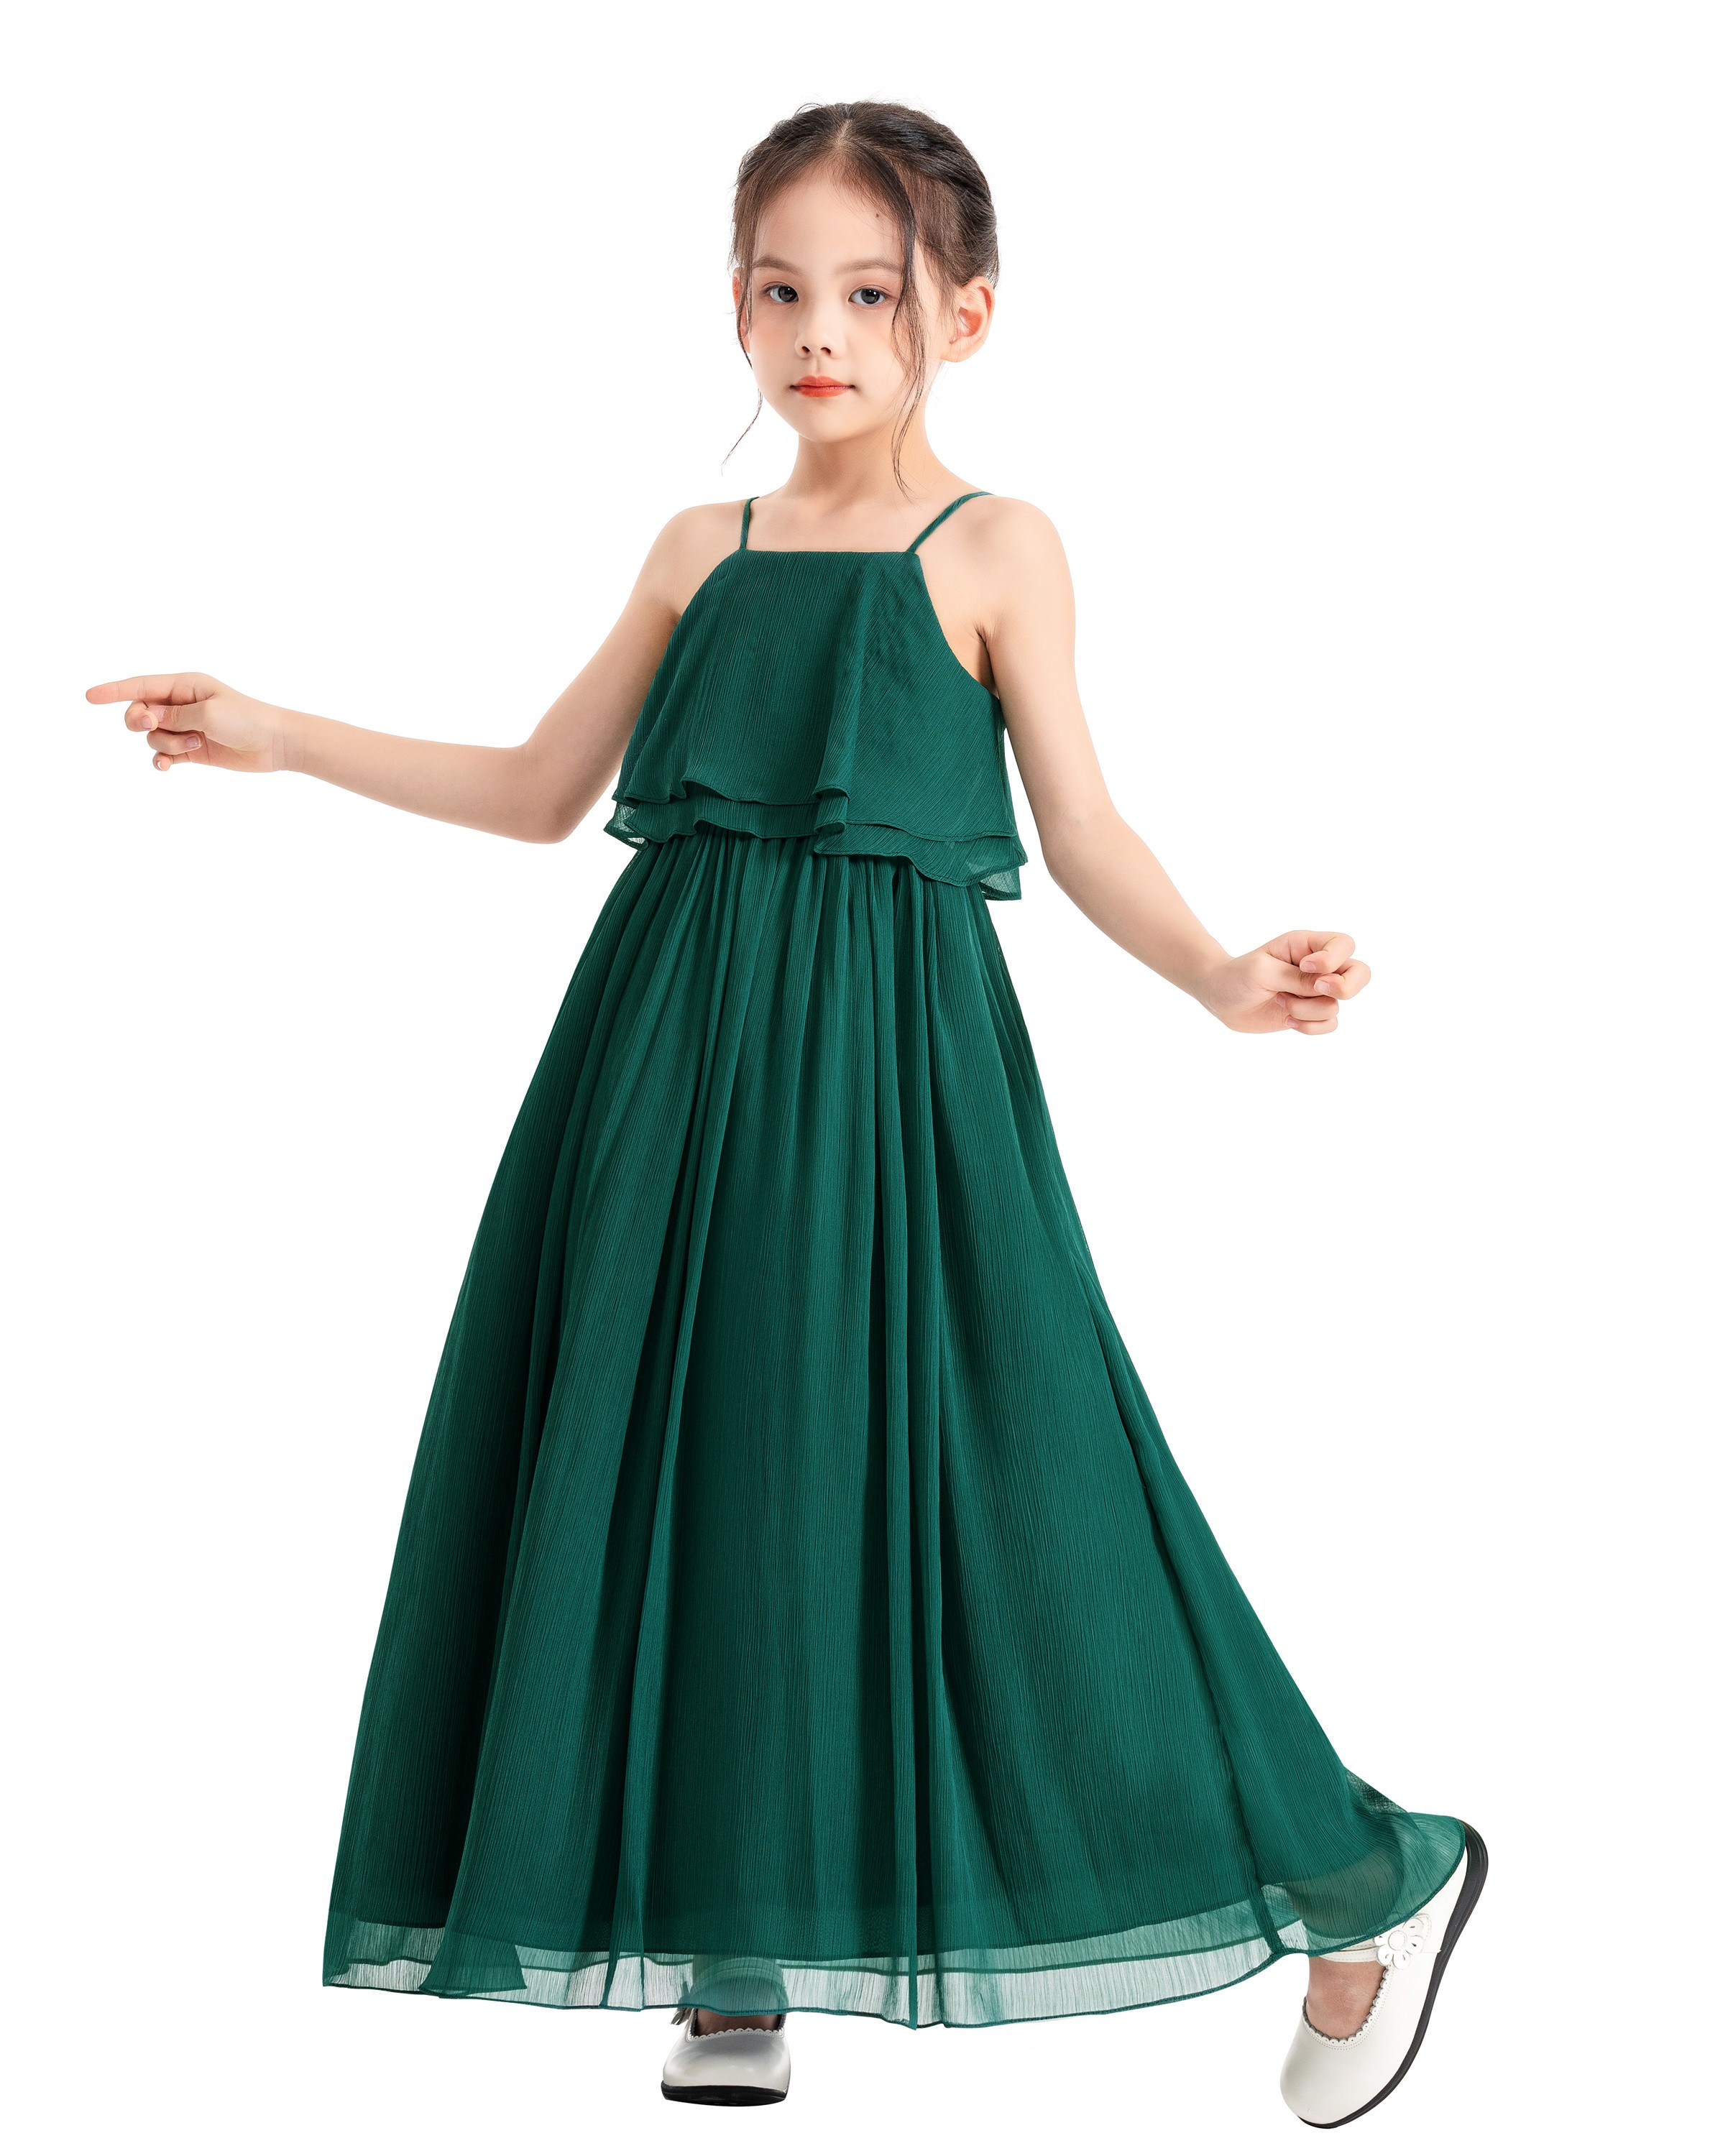 Forest Green A-Line Ruffle Chiffon Dress Chiffon Flower Girl Dress 192